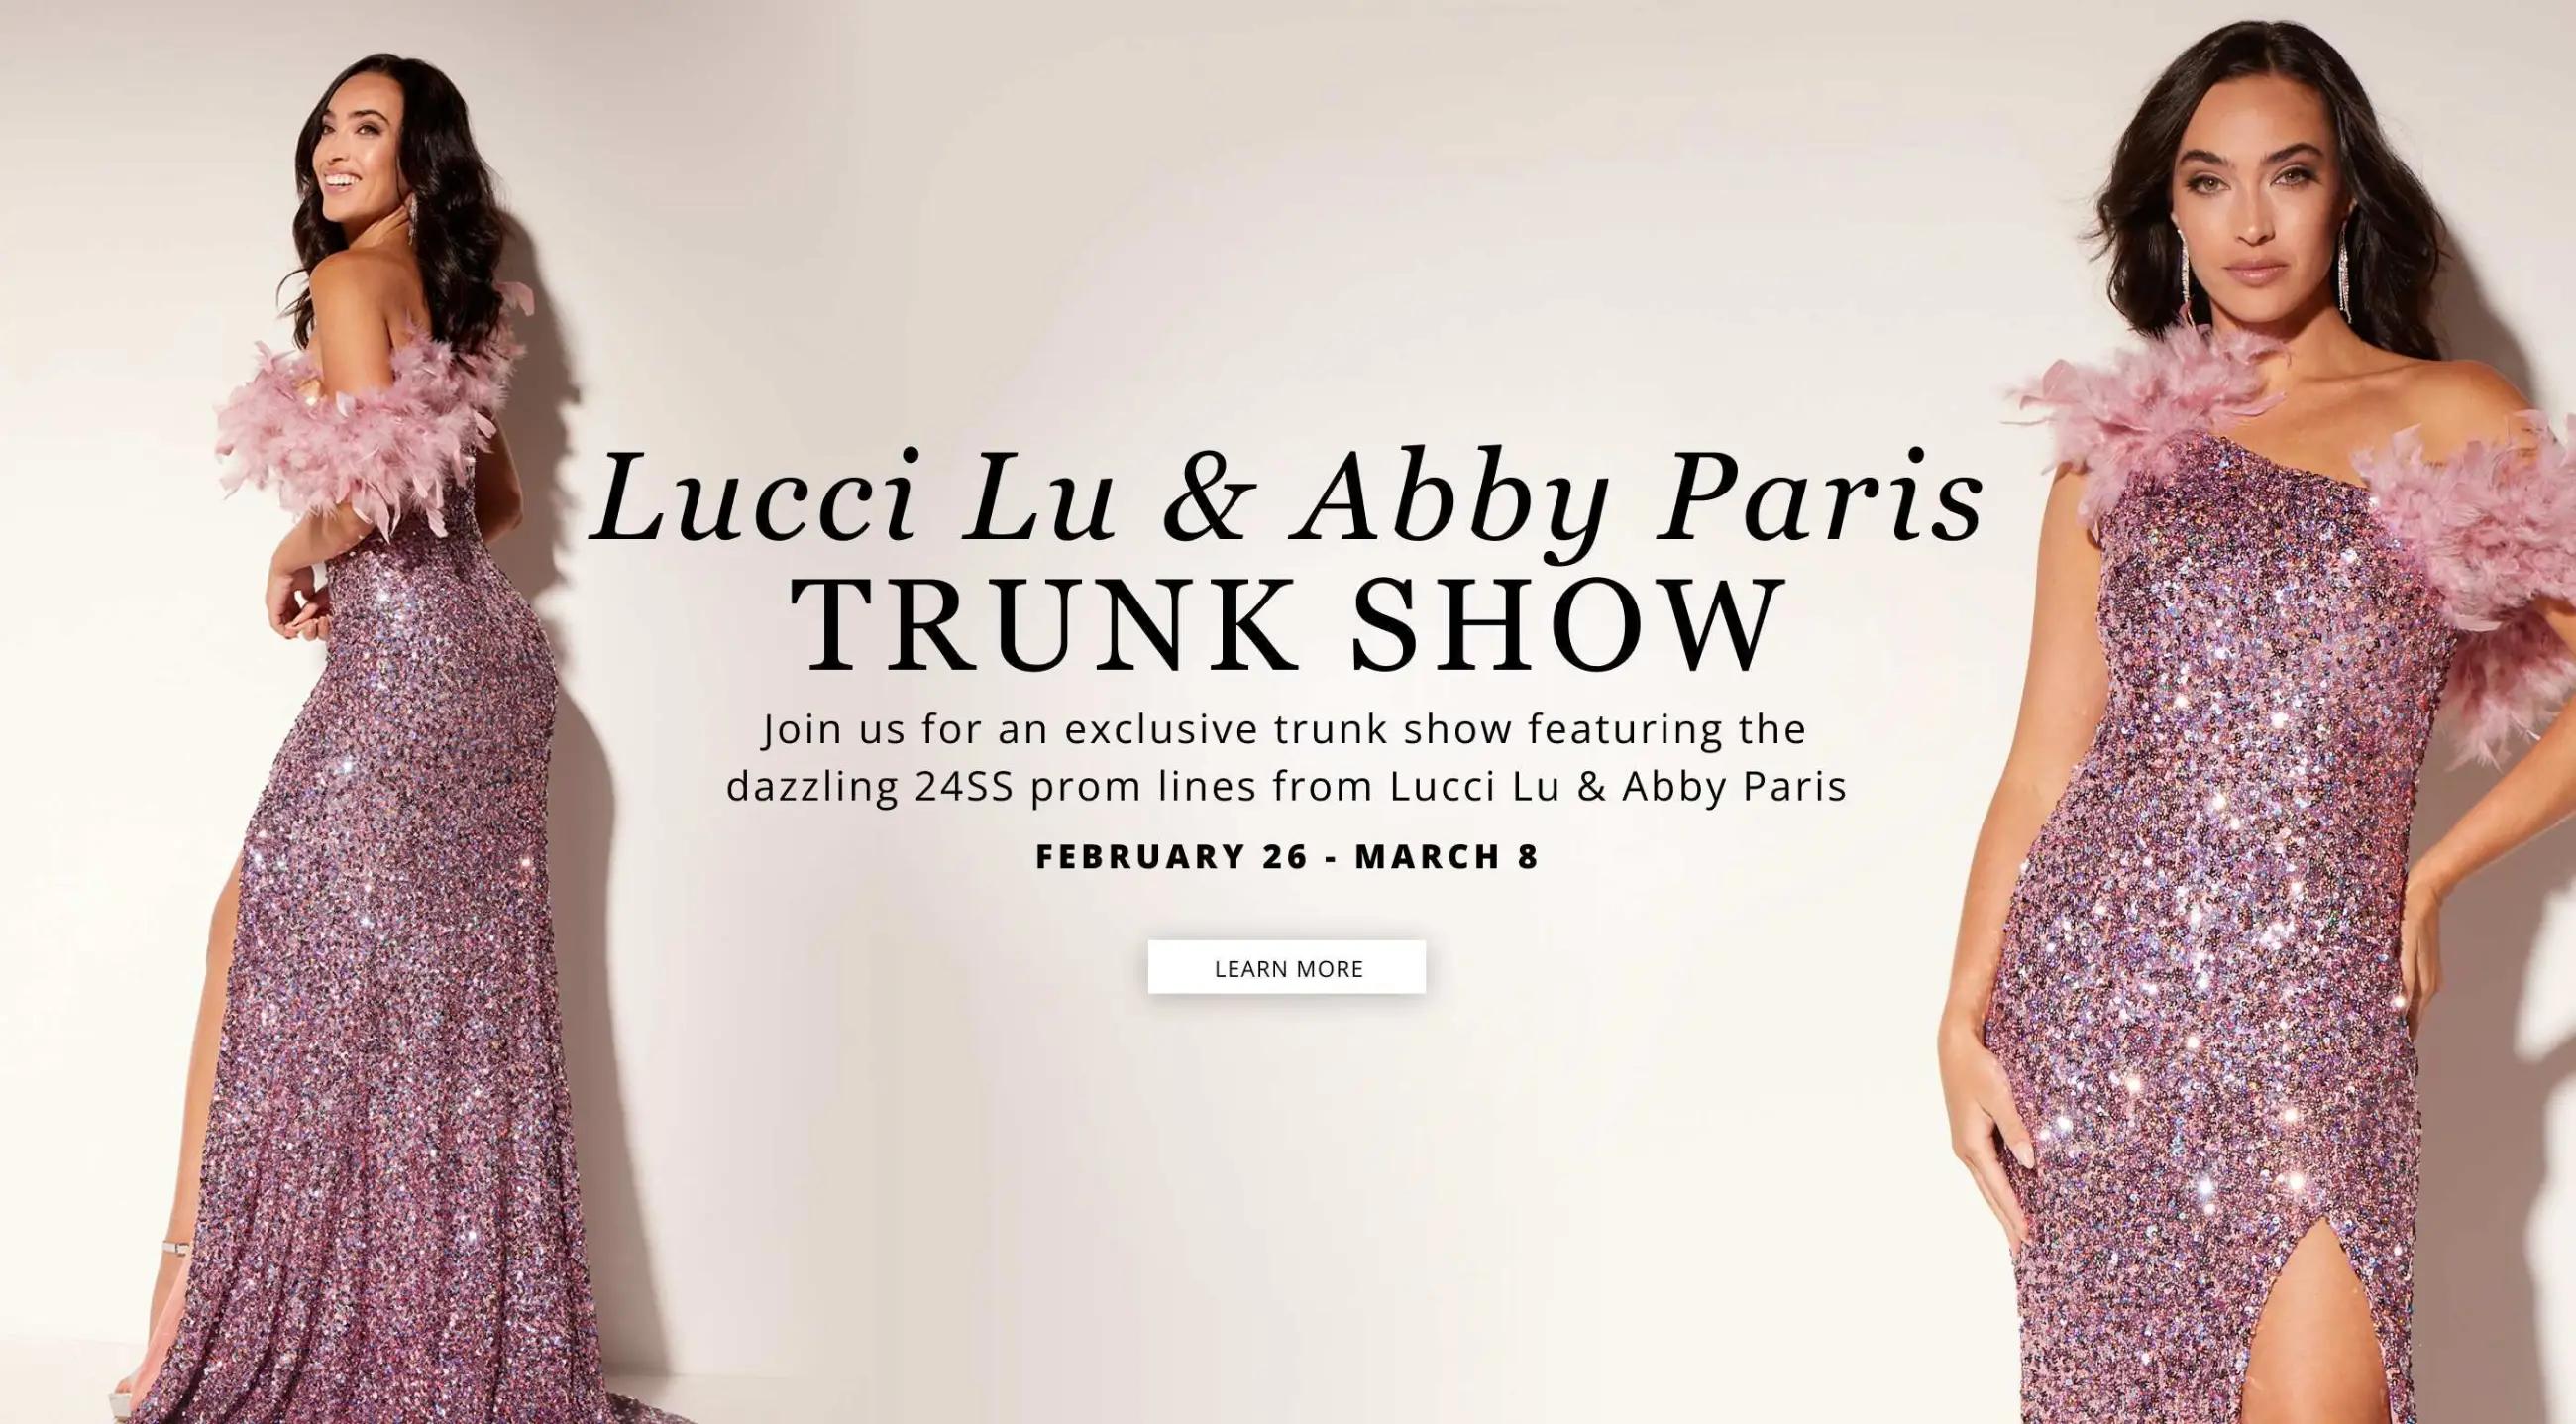 Lucci Lu & Abby Paris Trunk Show desktop banner